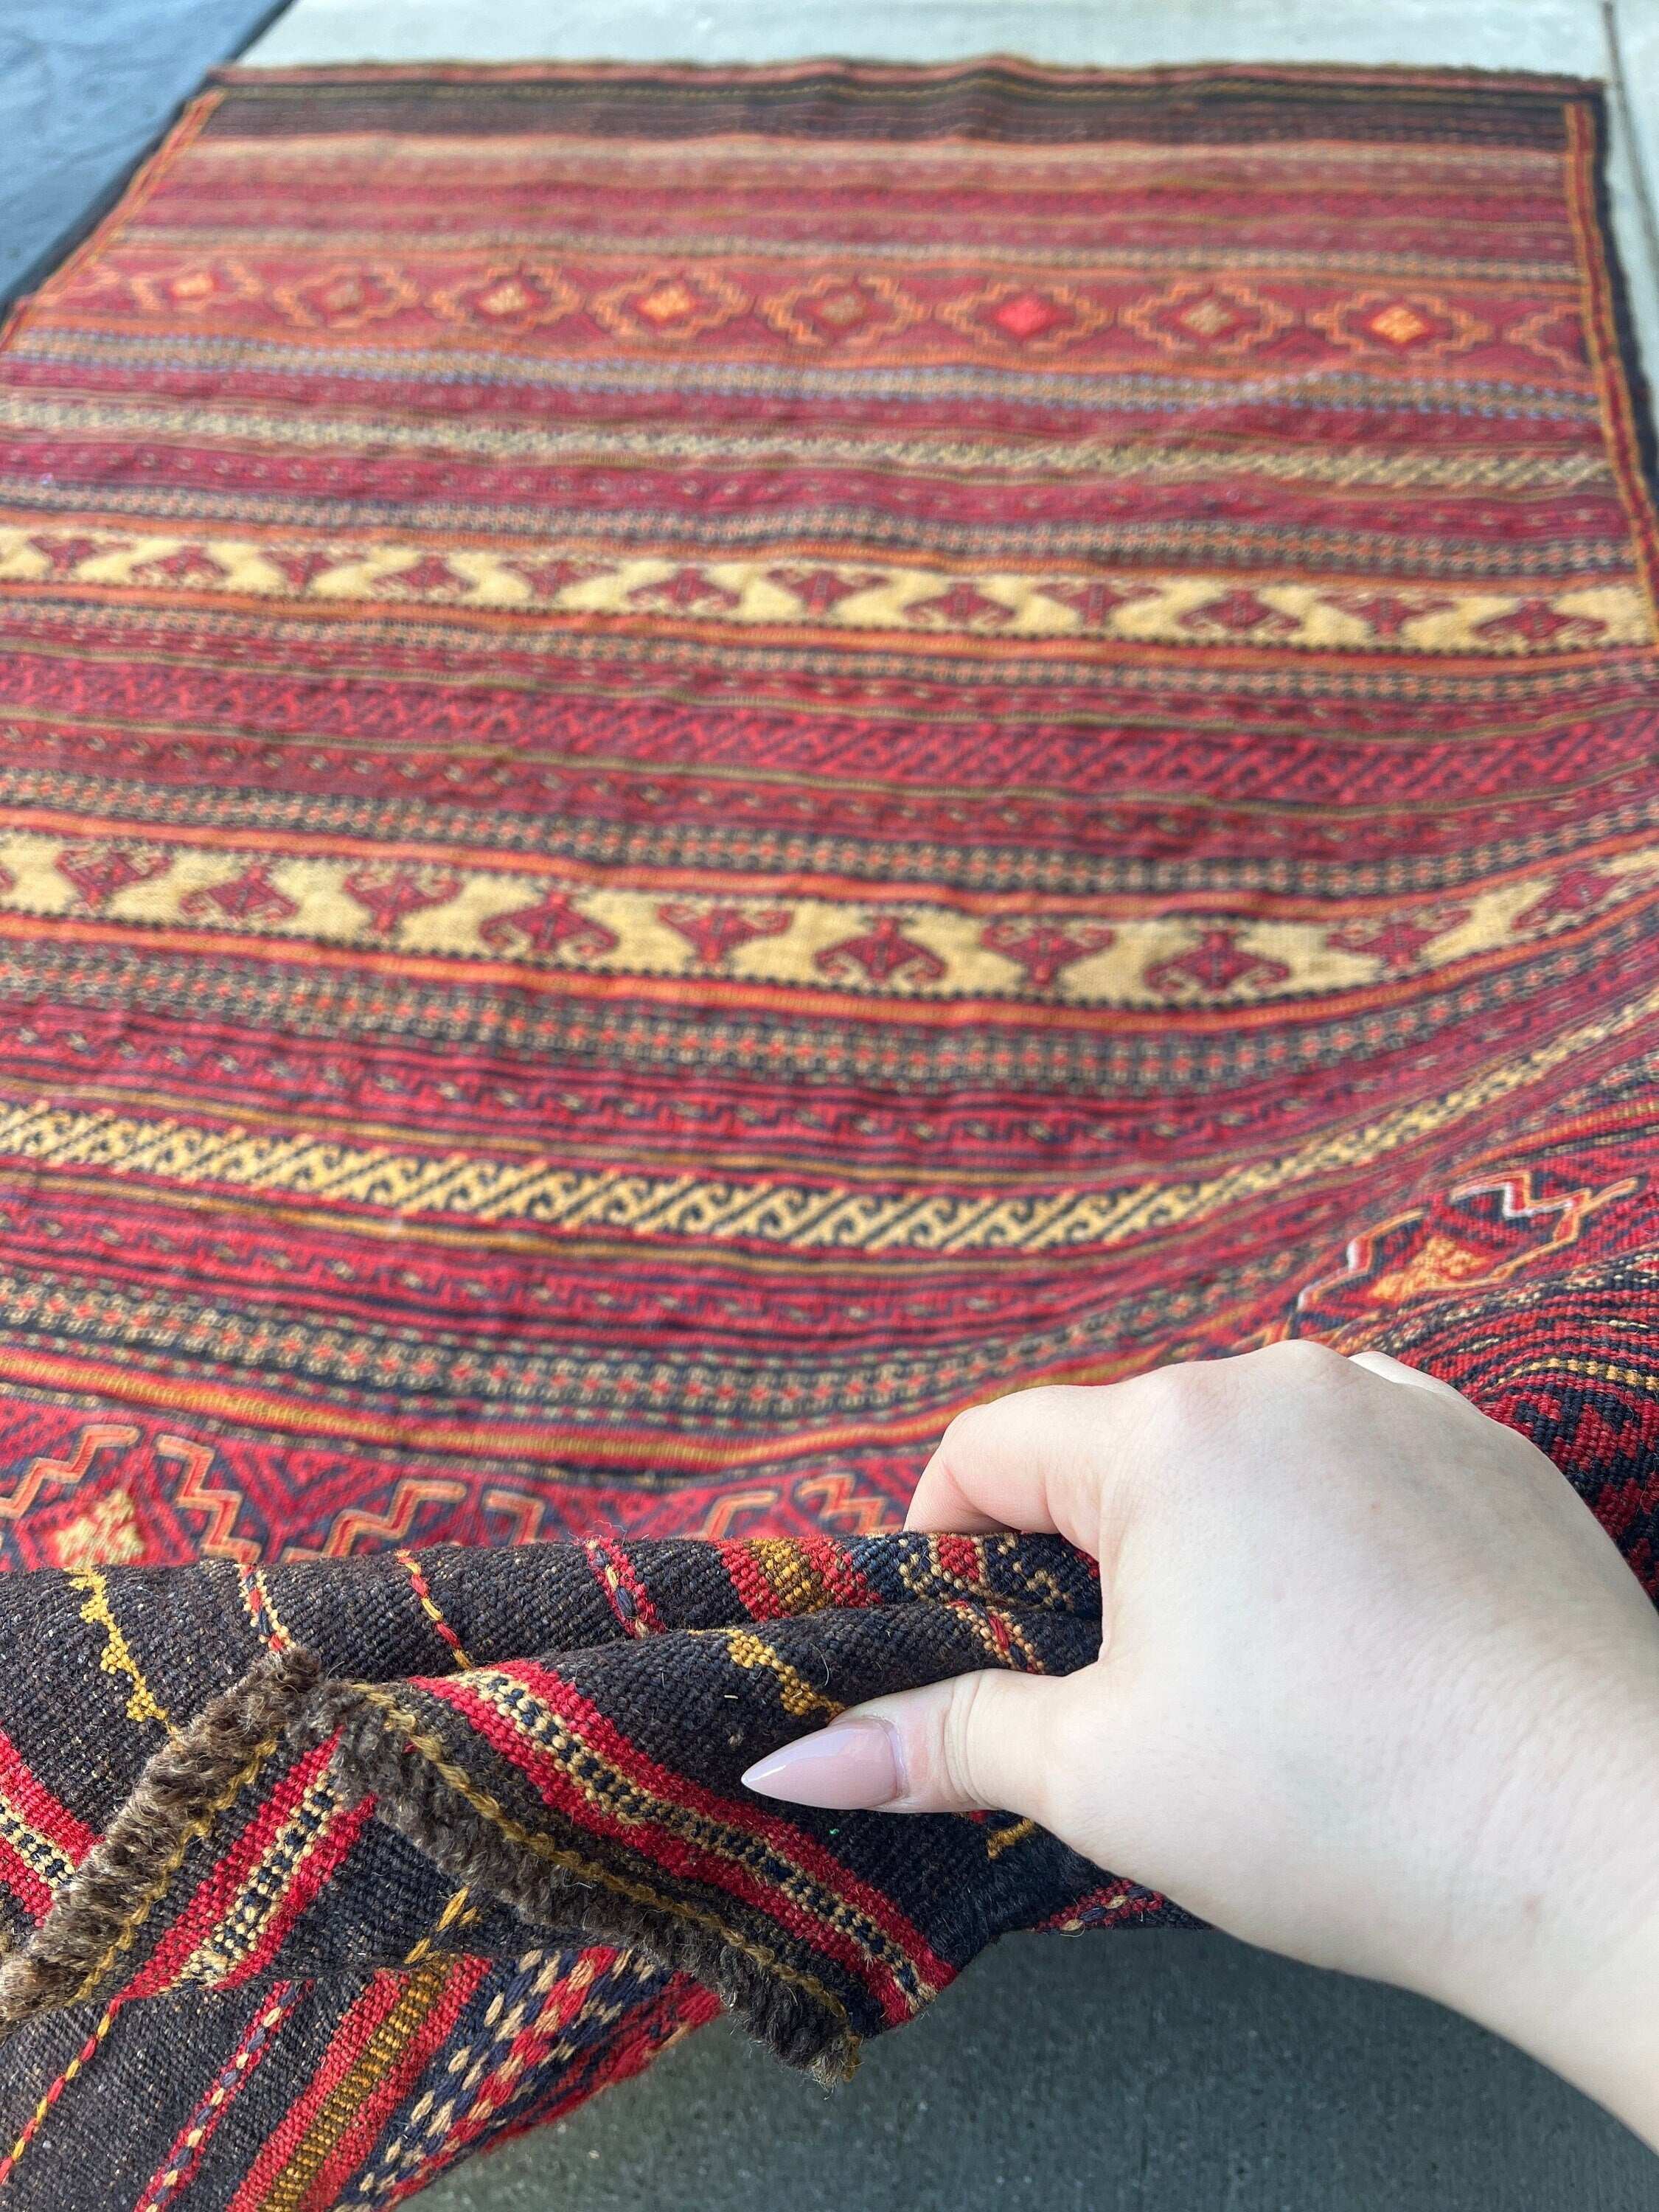 4x6 (120x185) Handmade Vintage Soumak Afghan Rug | Brick Red Black Gold Mustard Yellow Grey Geometric Hand Knotted Persian Turkish Wool Boho